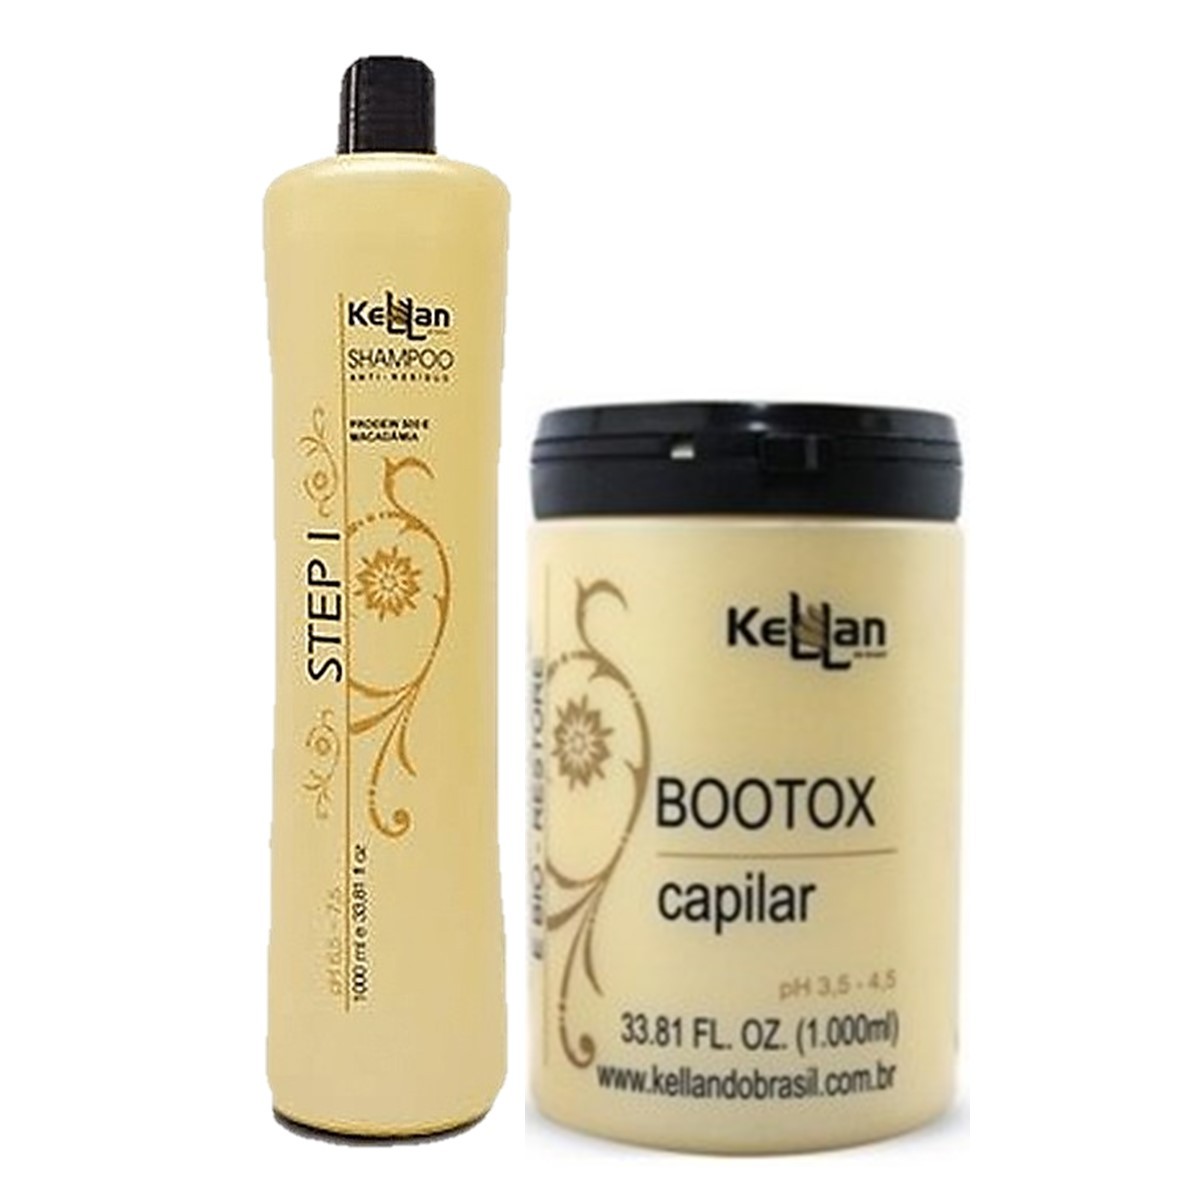 Kellan Profissional Shampoo STEP 1L + Redutor de Volume Tratamento Capilar 1kg